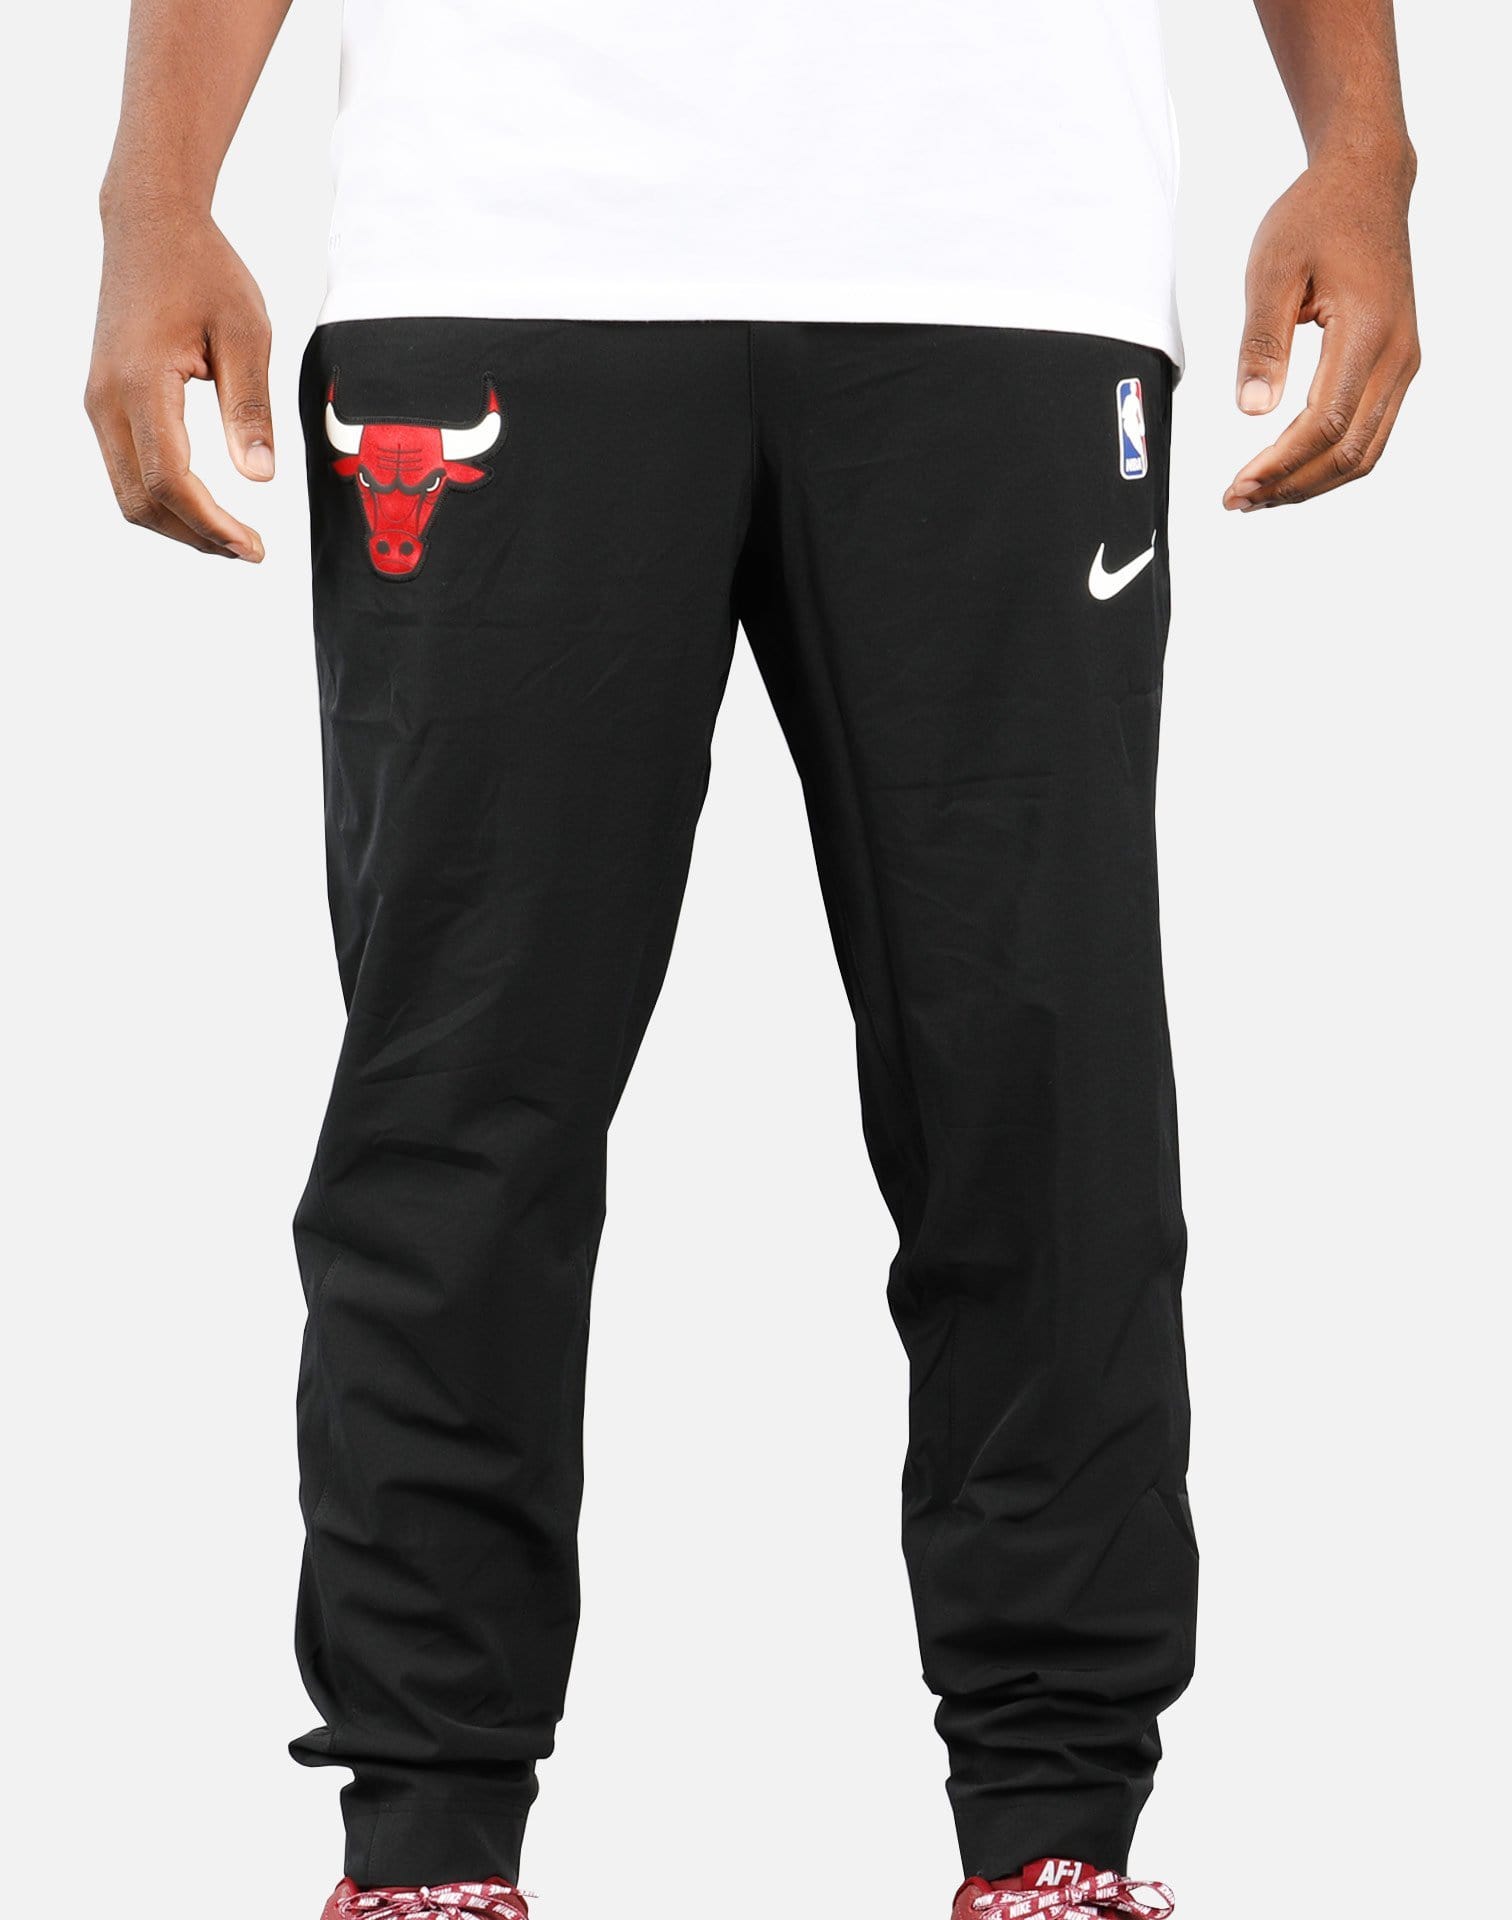 Marcelo Burlon NBA Print Black Sweat Pants – ZOOFASHIONS.COM